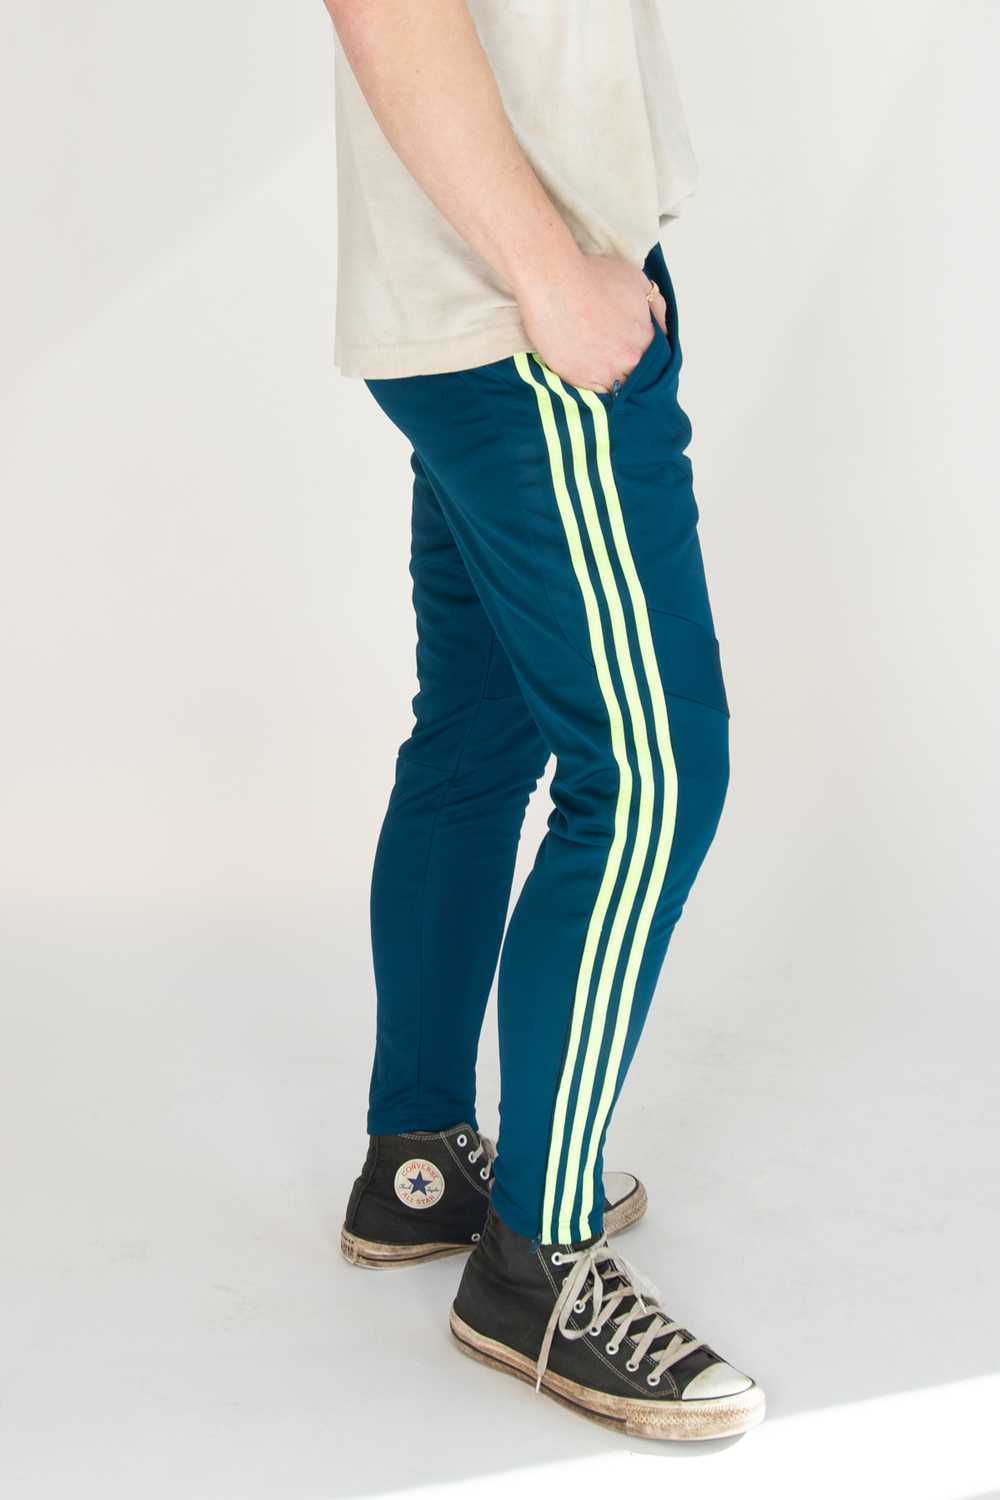 Teal & Lime Adidas Soccer Pants (sz. L) - image 3